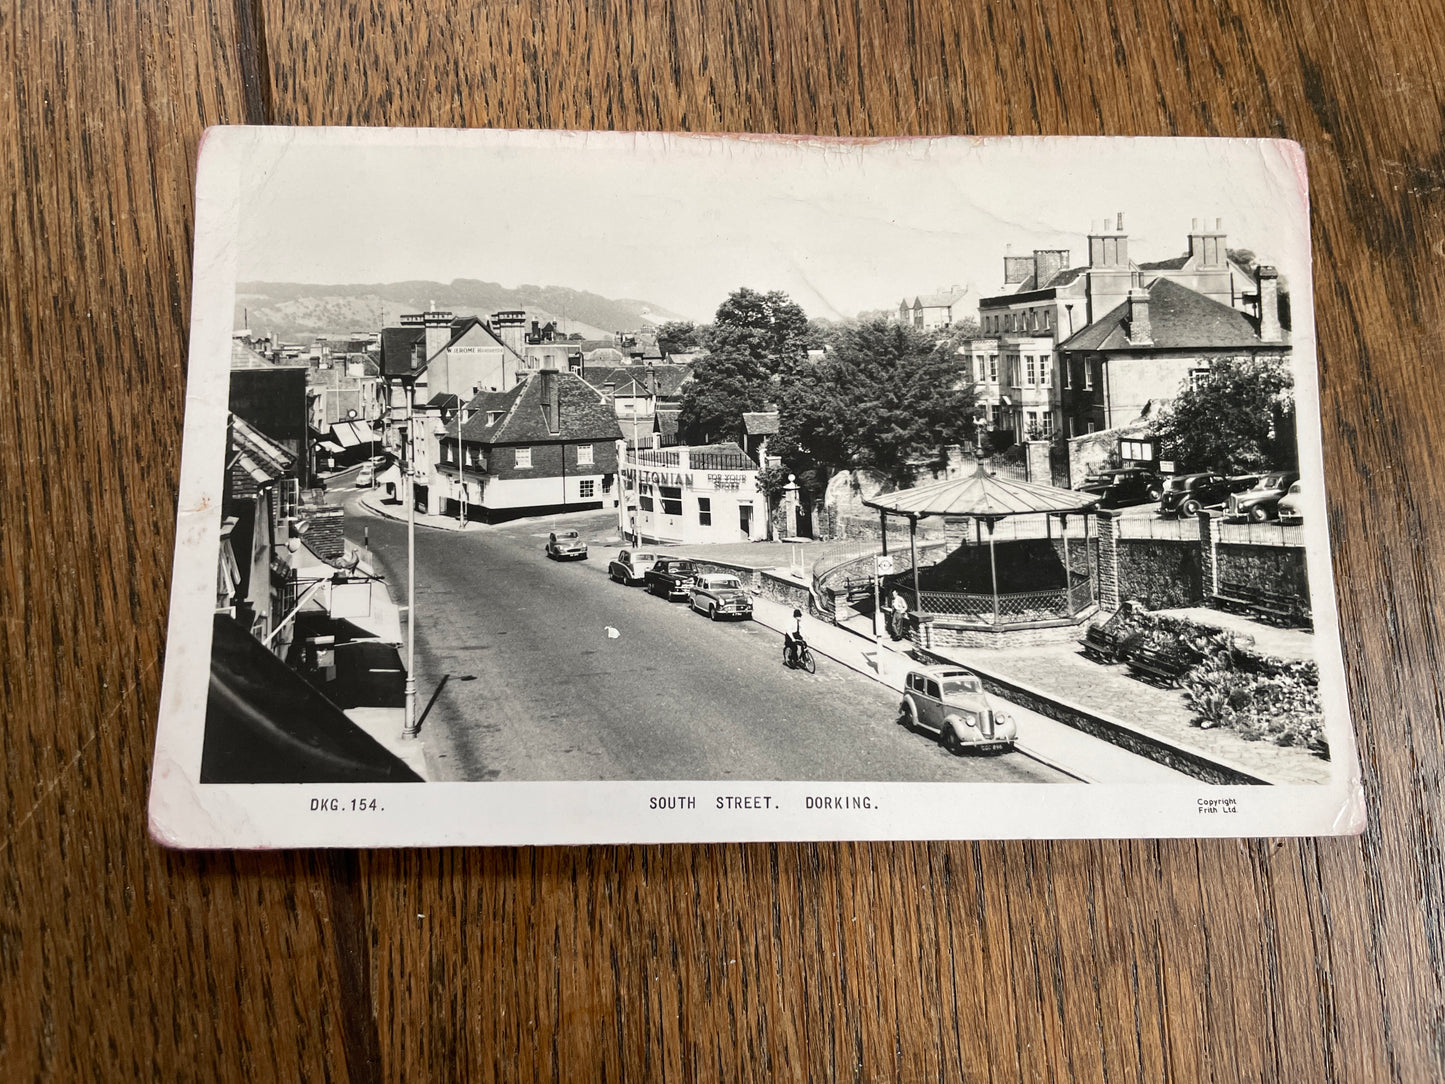 Vintage Frith's Postcard of Dorking, South Street